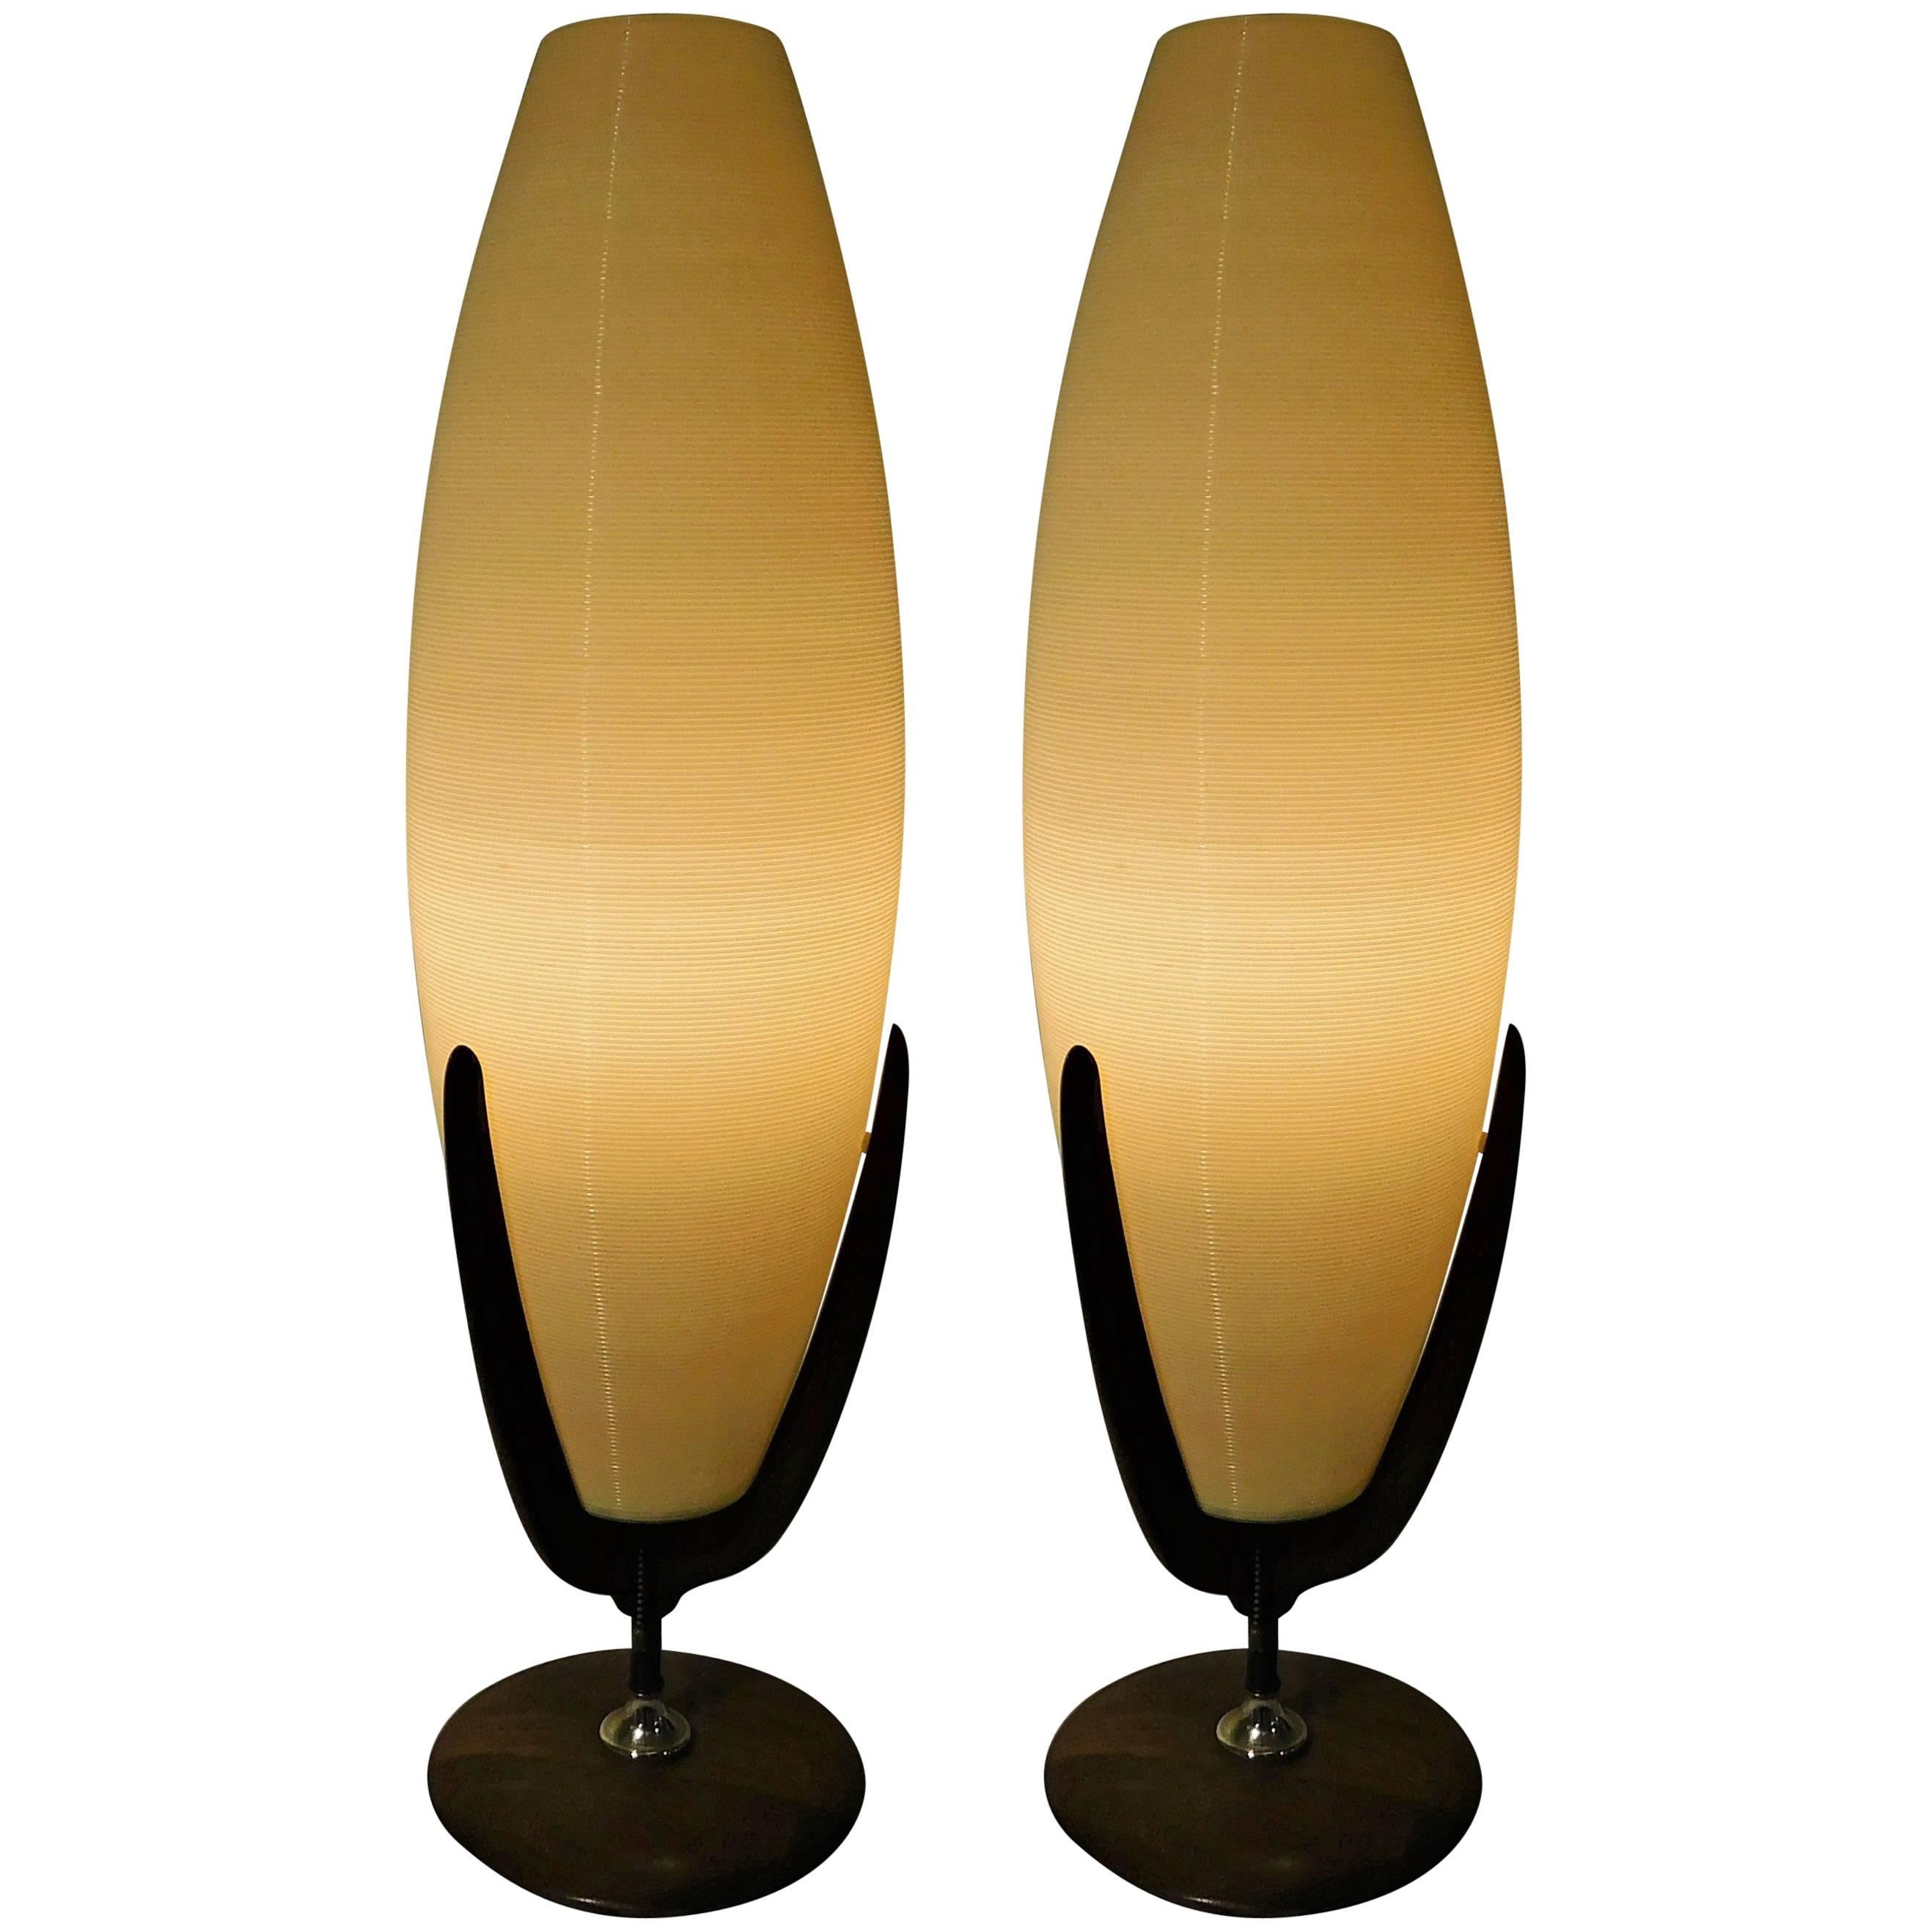 Pair of Mid-Century Modern Spun Fiberglass and Teak Atomic Lamps